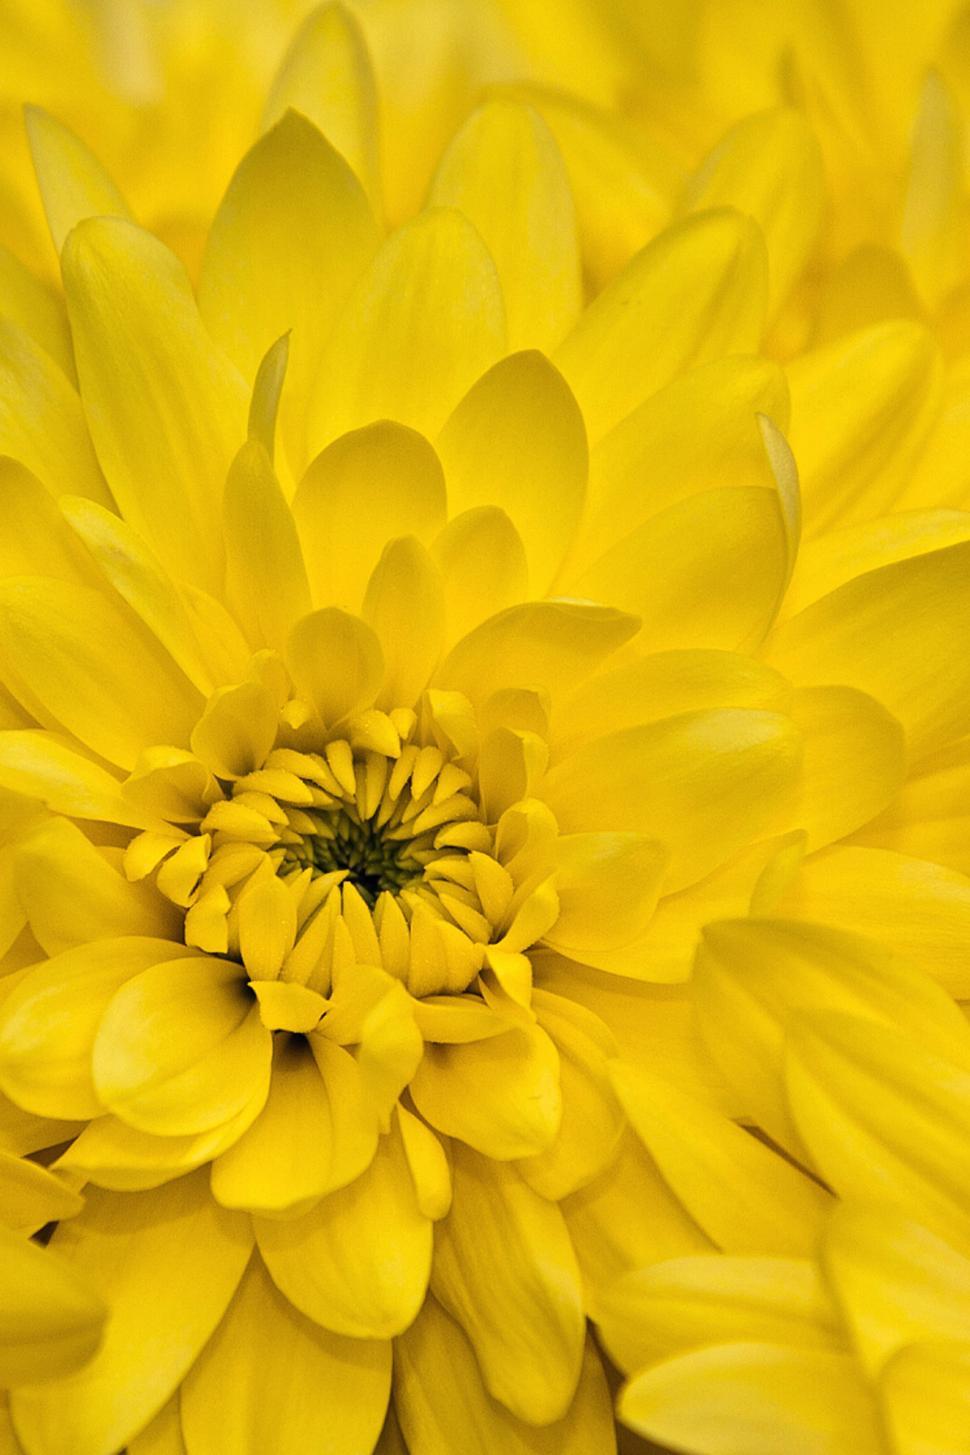 Free Image of Yellow Chrysanthemums Flower Center Closeup 